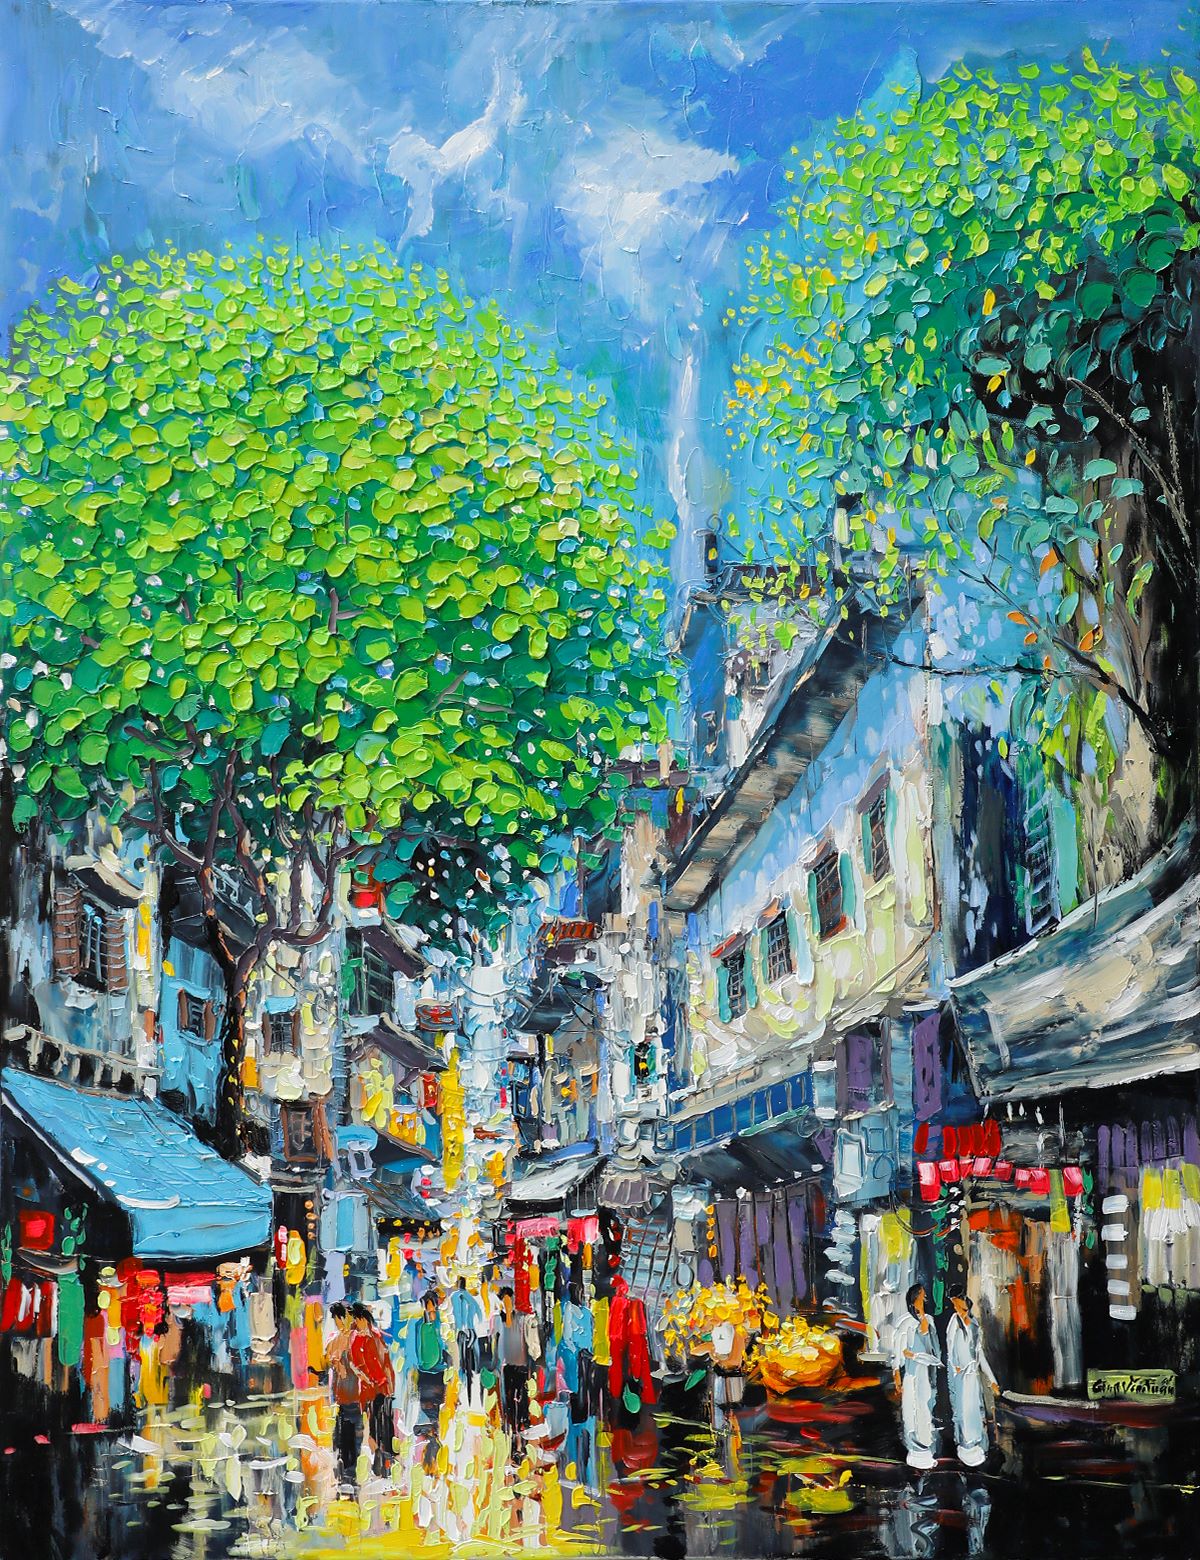 Hanoi Autumn I - Vietnamese Oil Painting by Artist Giap Van Tuan